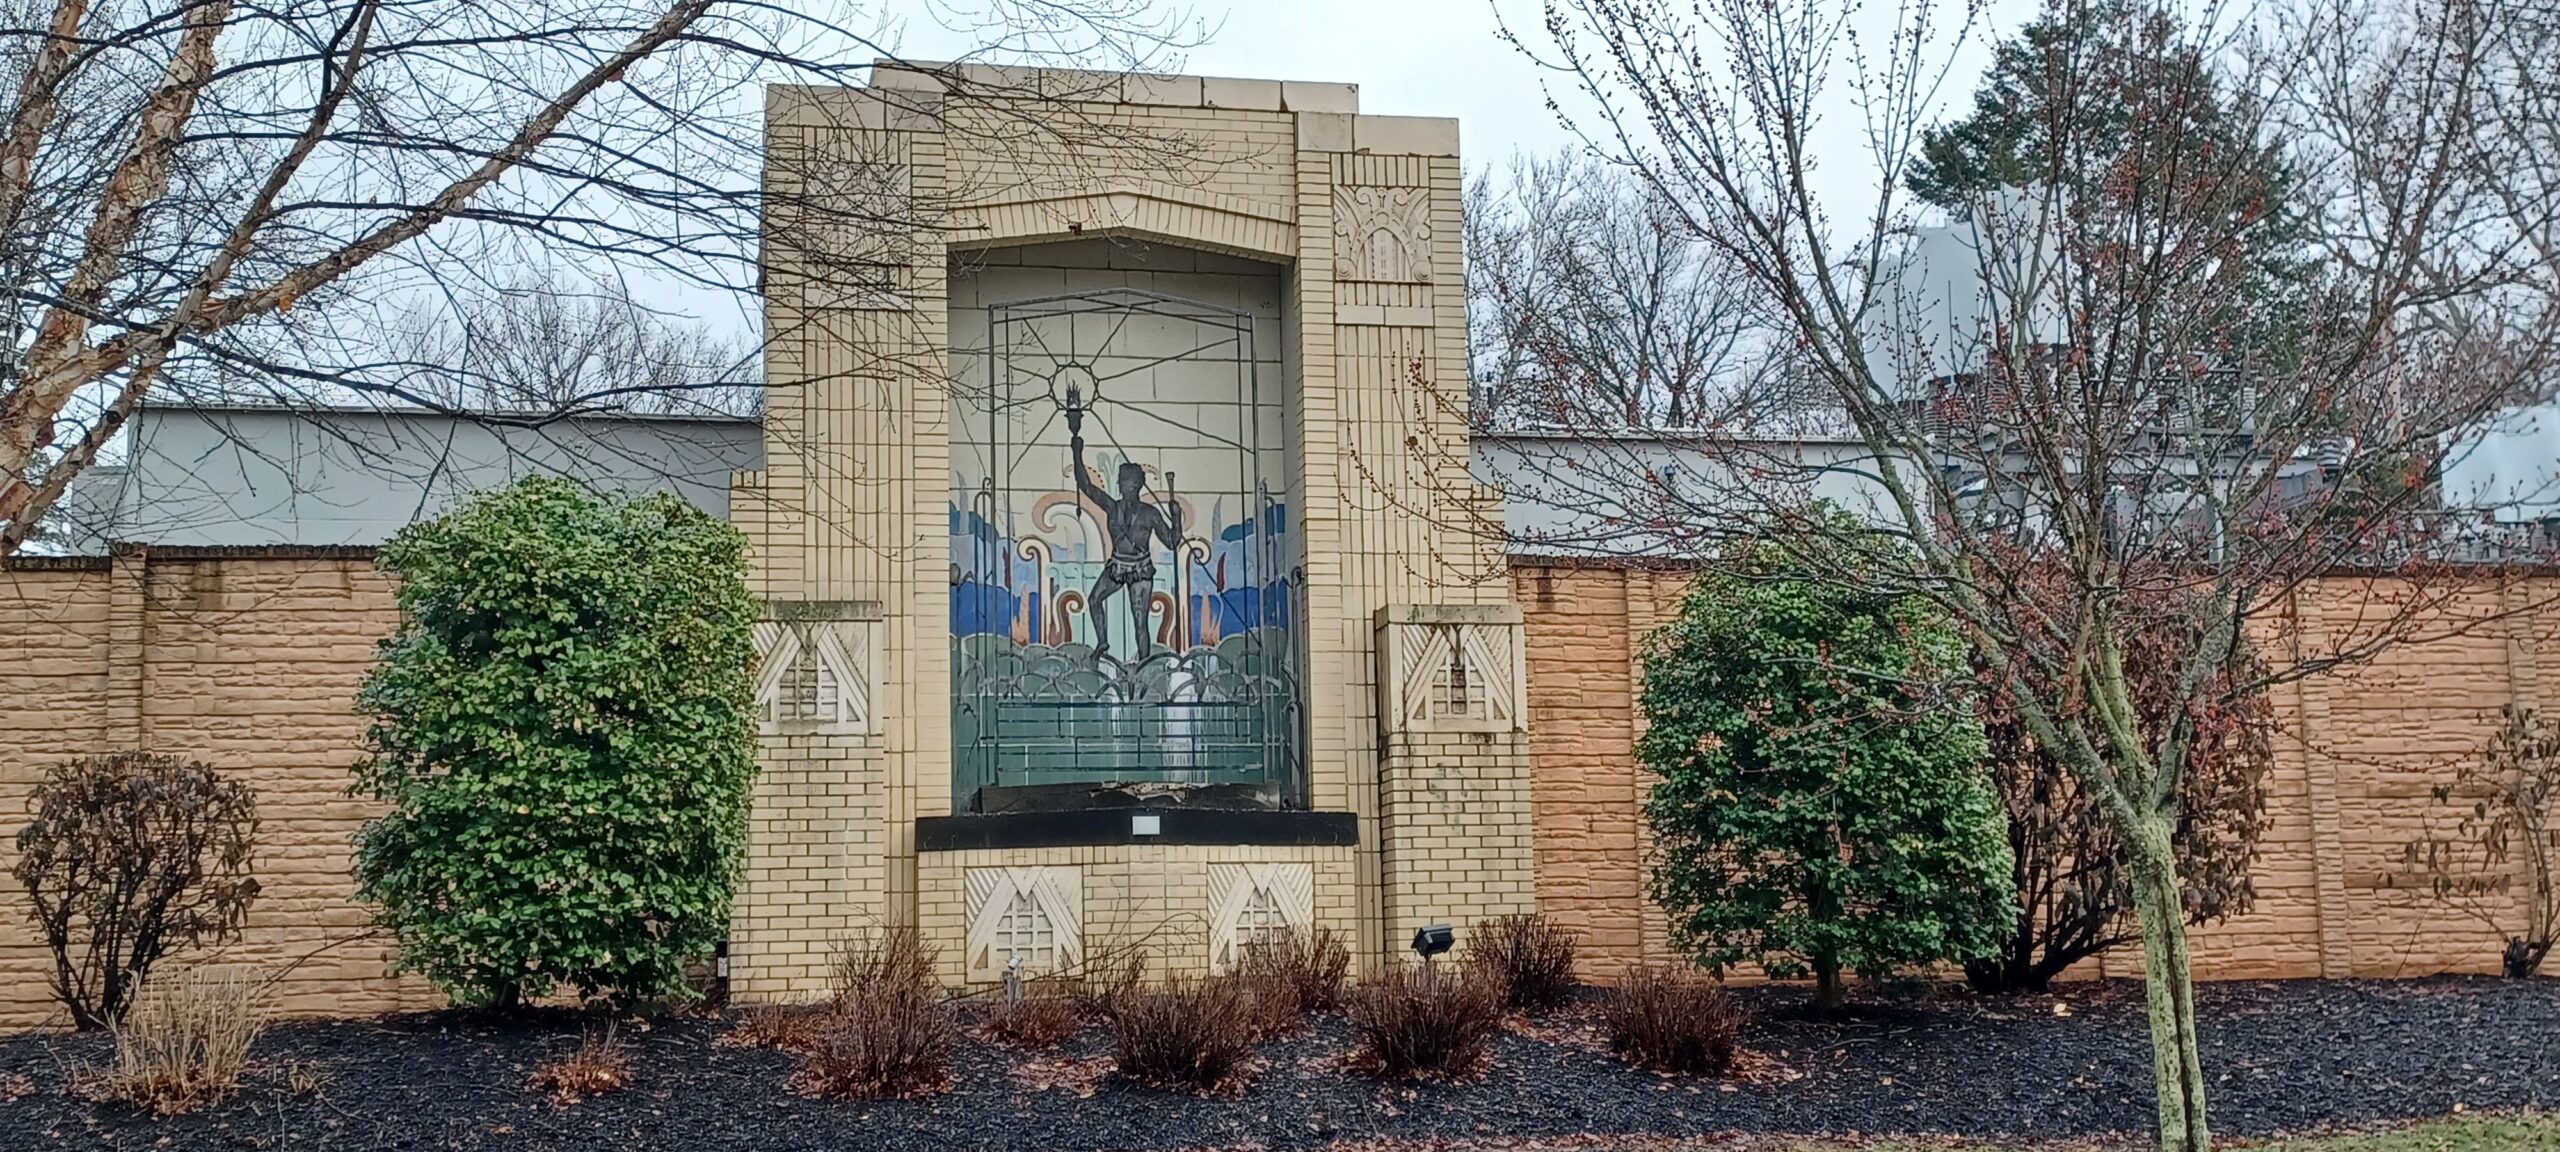 Duquesne Light Company Art Deco Mural, Chadwick Street, Sewickley, PA